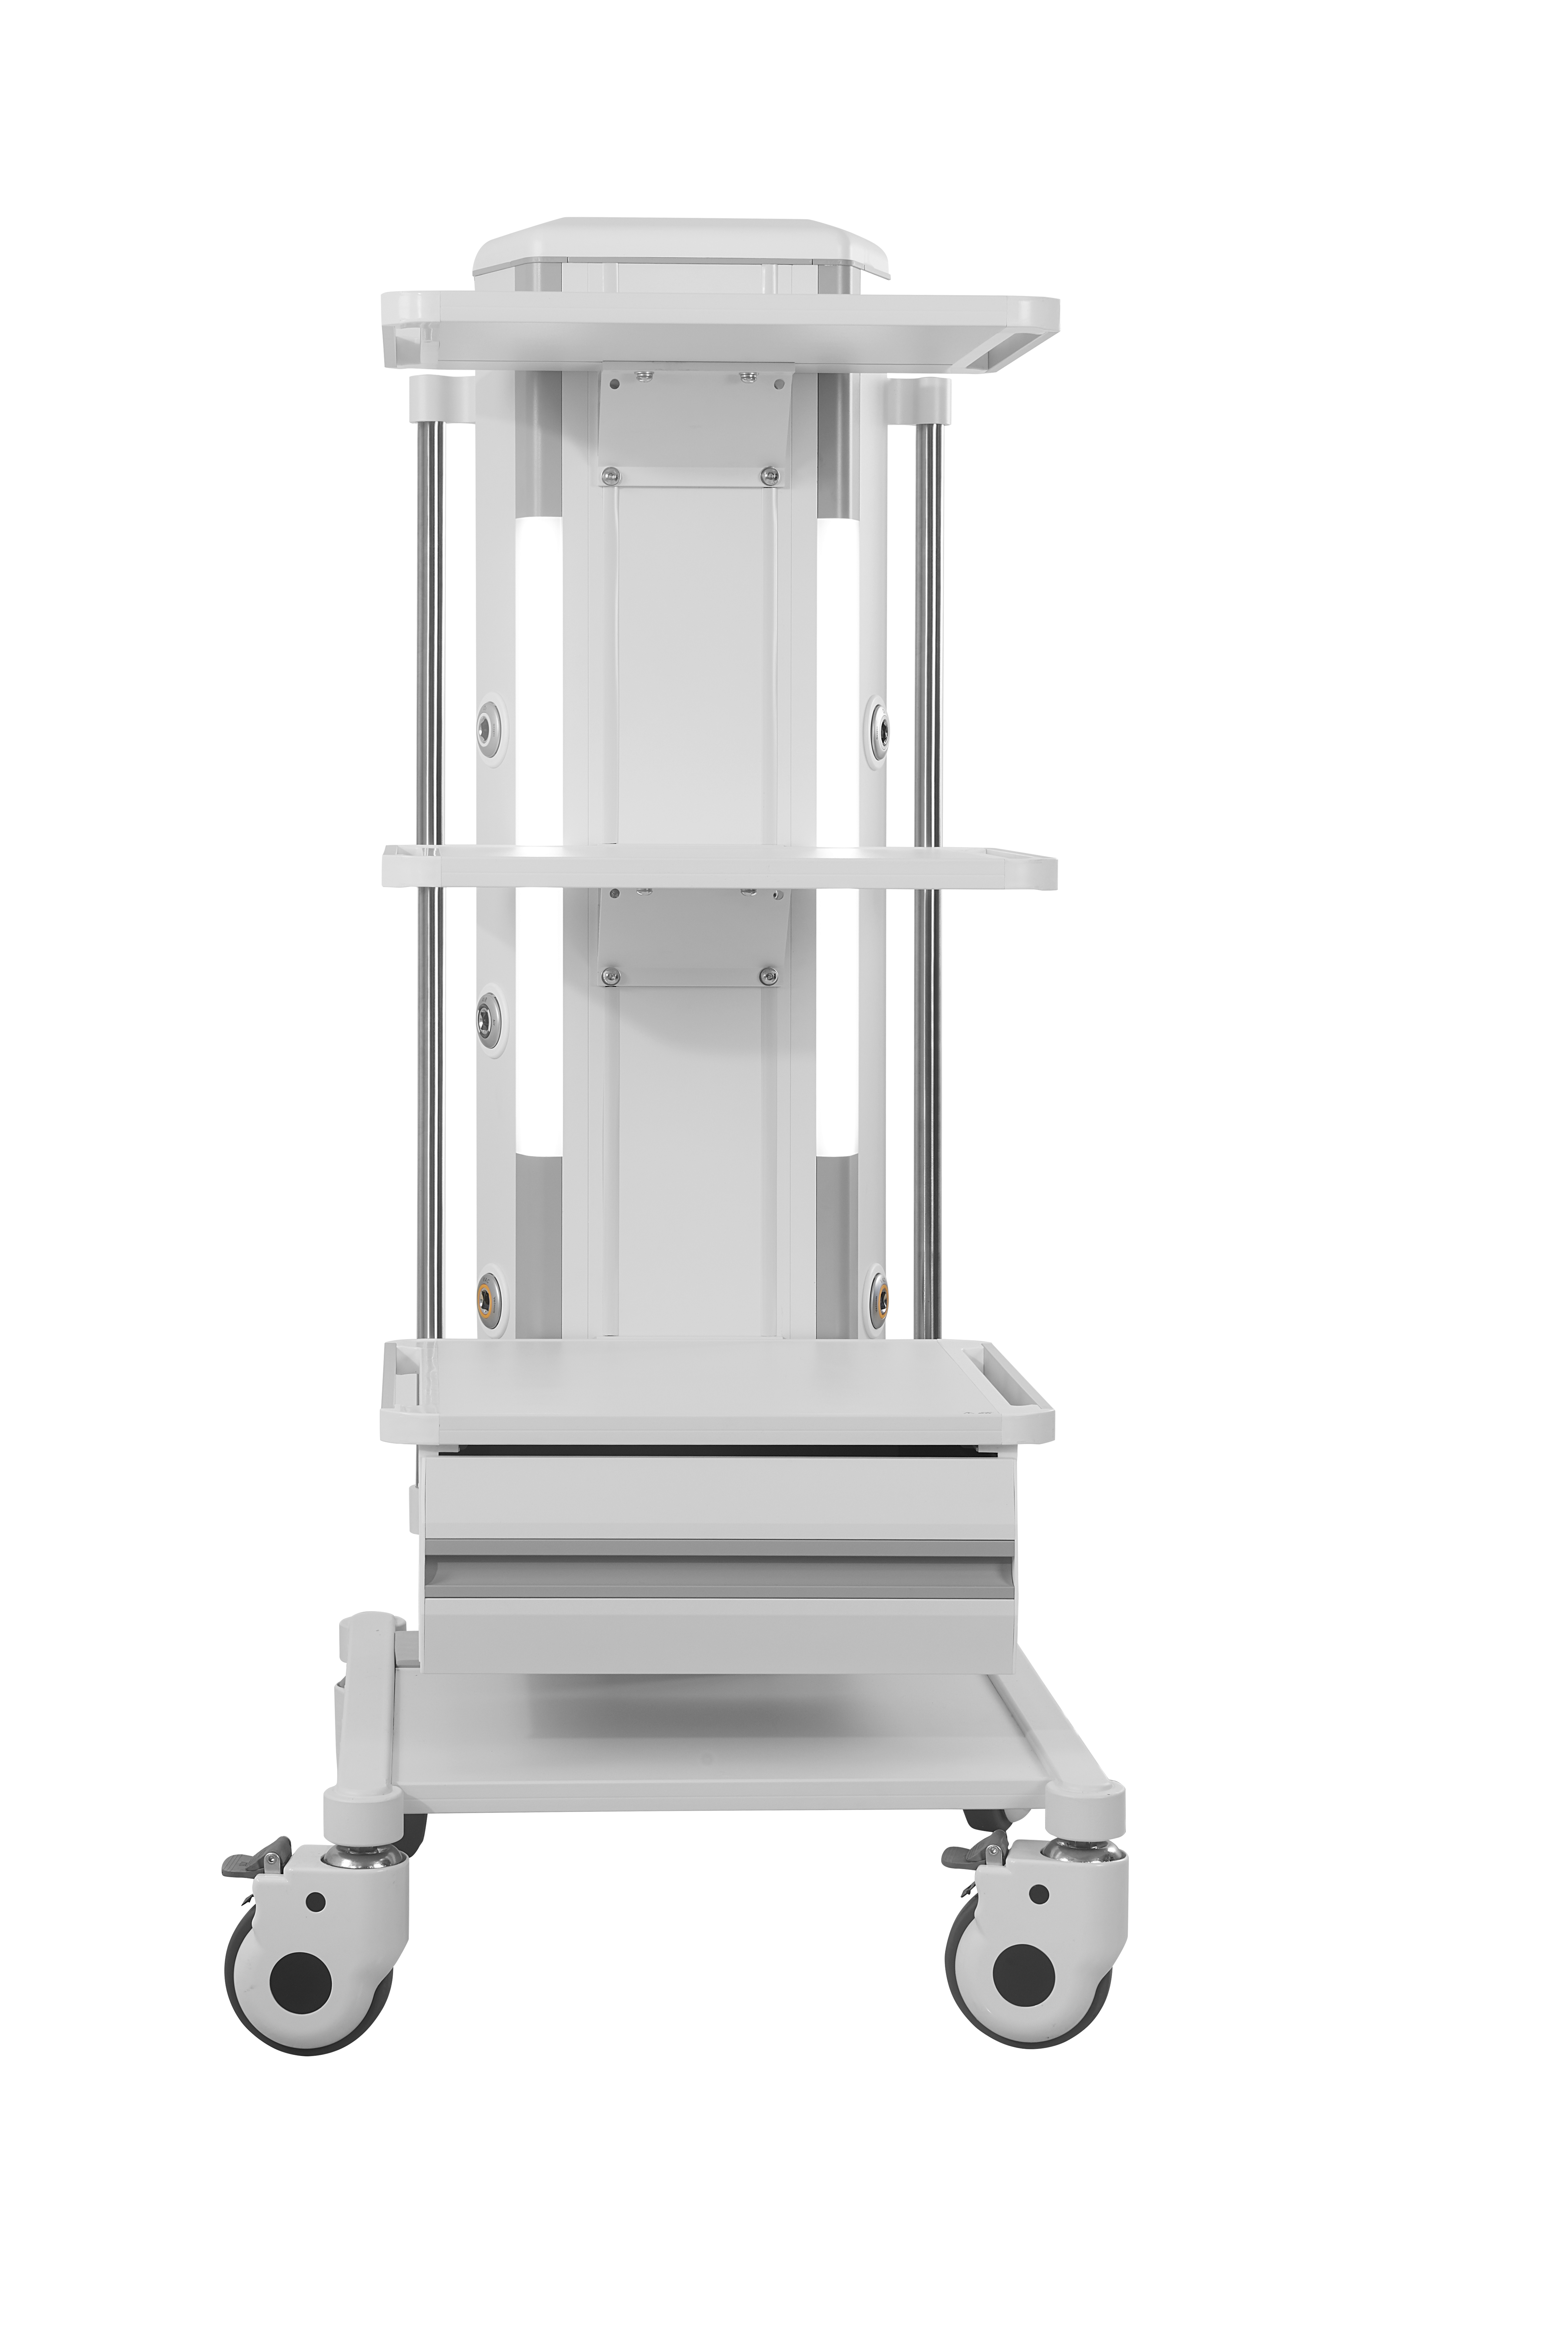 PF-800移动式吊塔